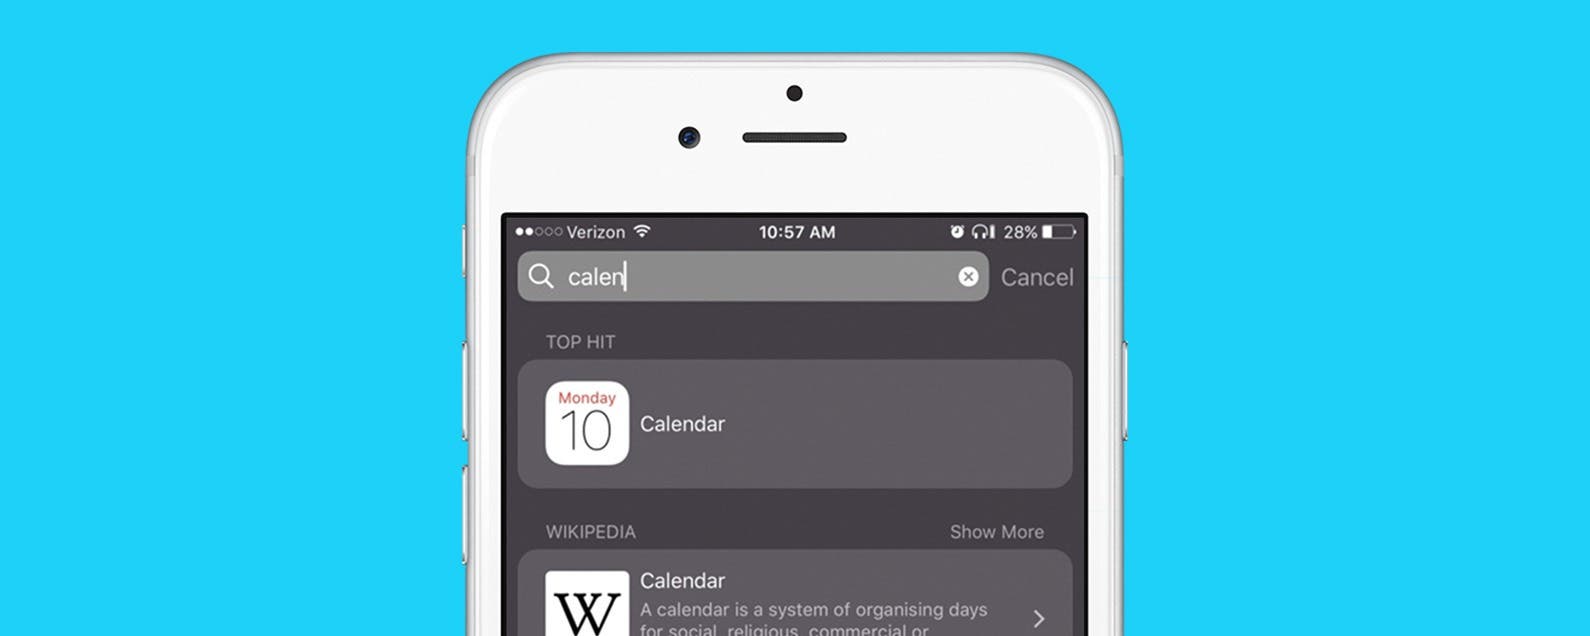 ipad calendar app icon